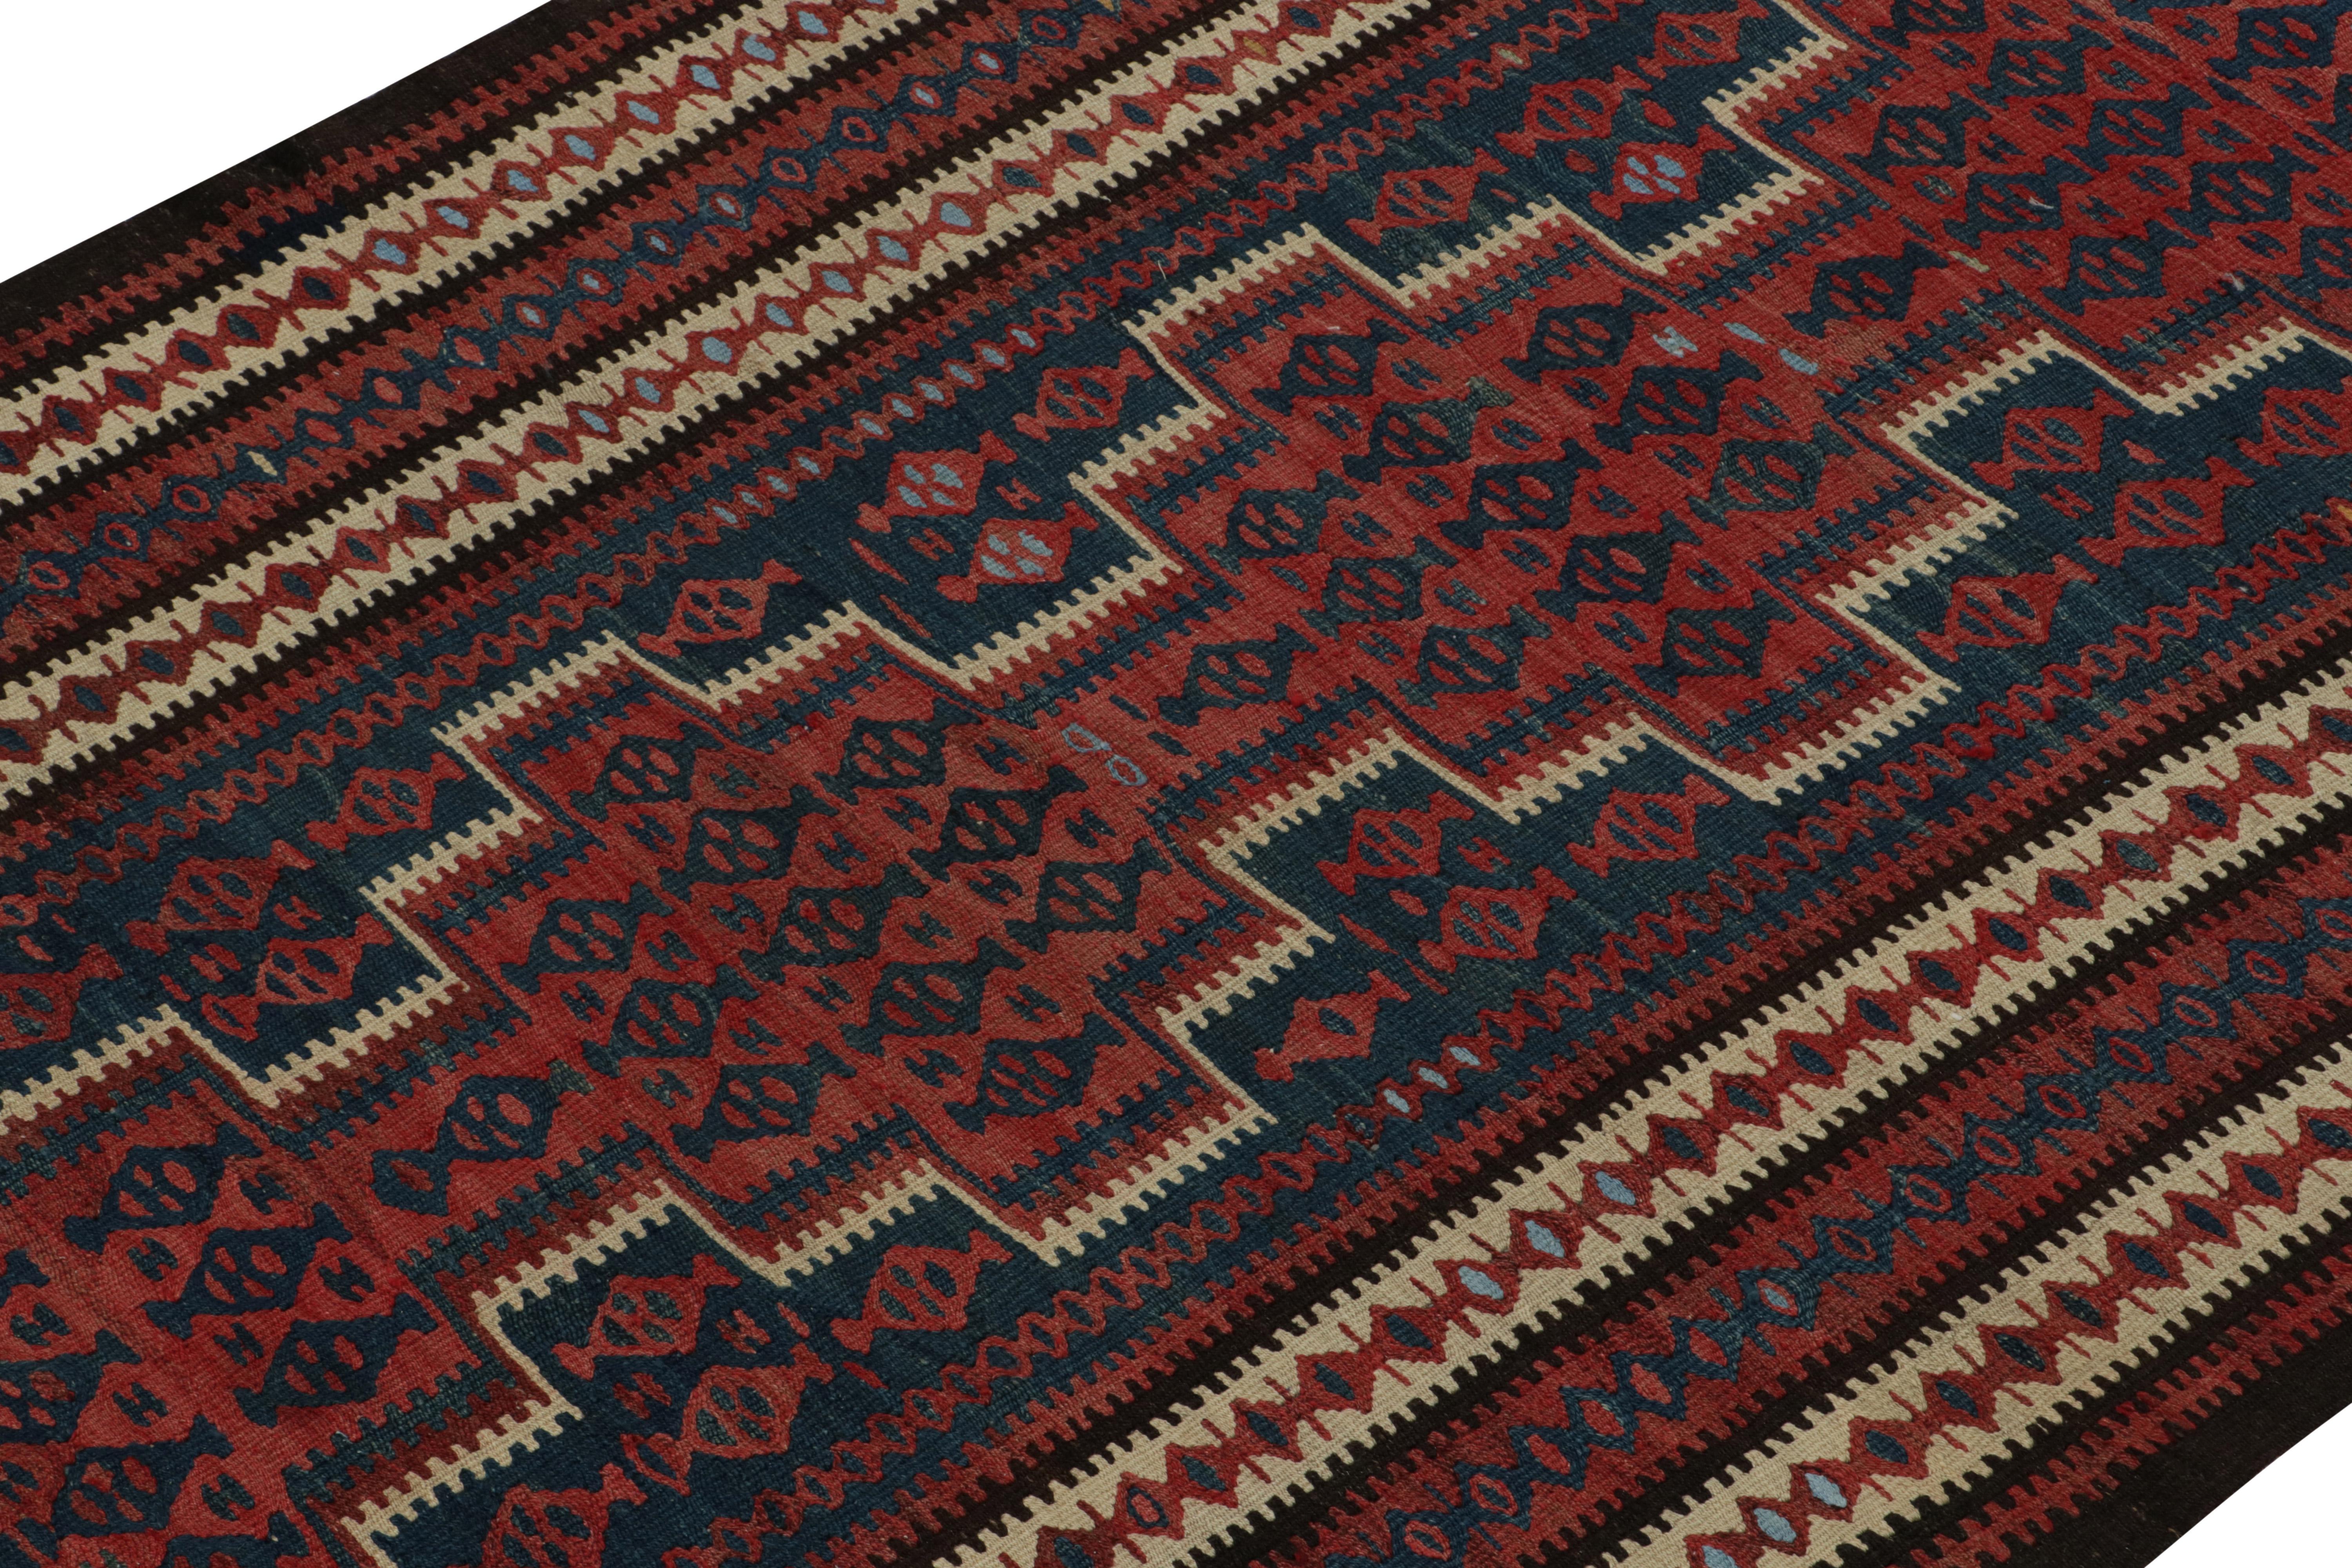 Tribal 1950s Vintage Kilim Rug in Red, Blue and Brown Geometric Patterns by Rug & Kilim For Sale